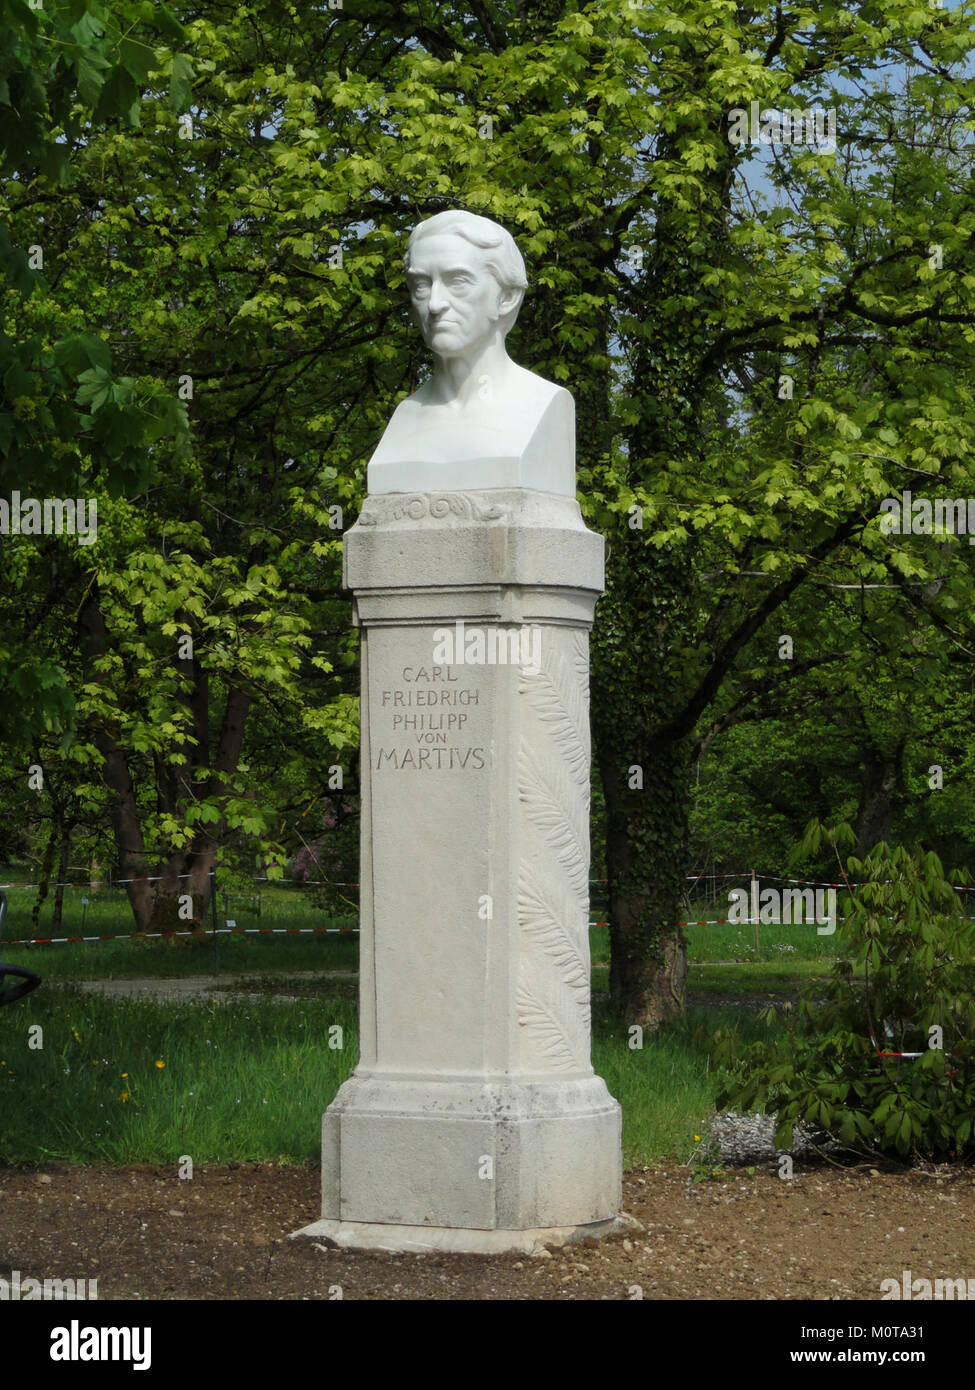 Carl Friedrich Philipp von Martius memorial - DSC07556 Stock Photo